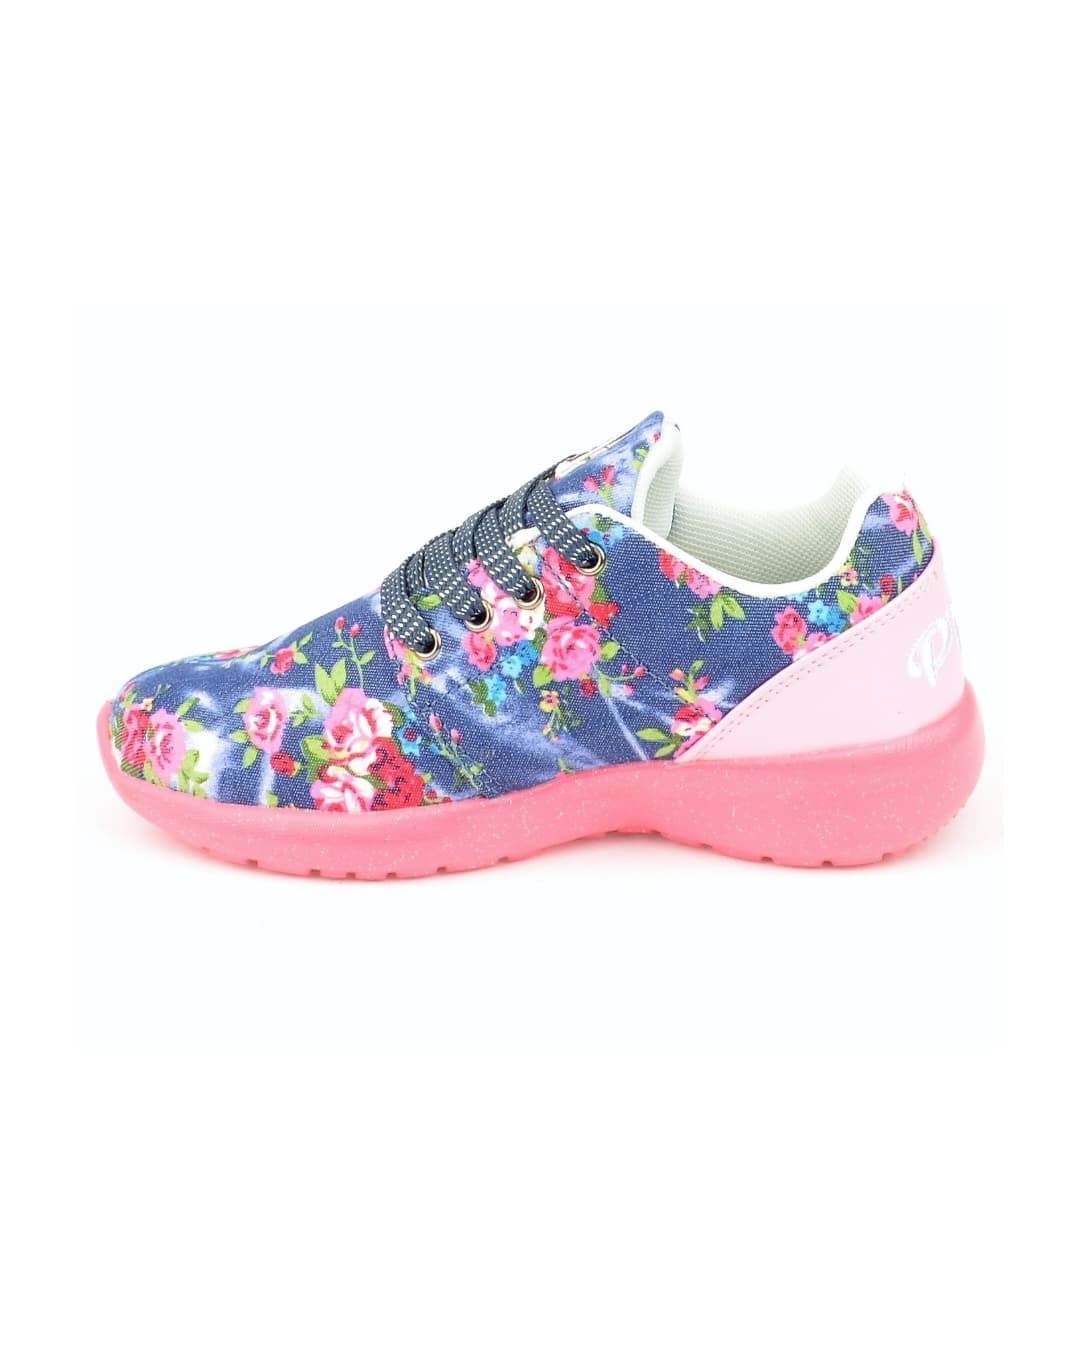 Primigi flower print canvas sneakers for girls - Image 4